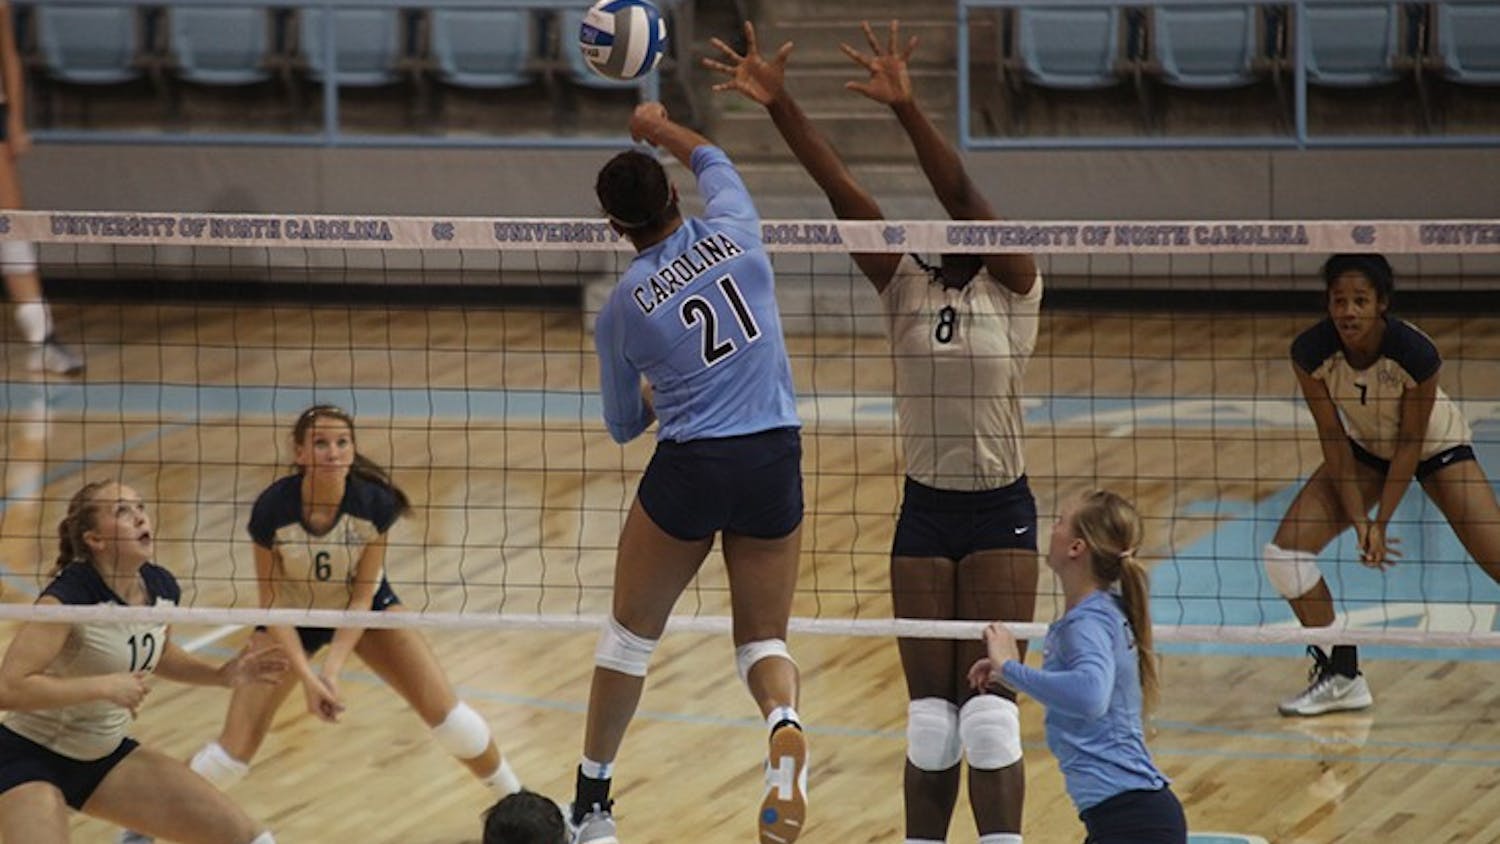 Women's volleyball beat George Washington University 3-0 on Friday September 13, 2013